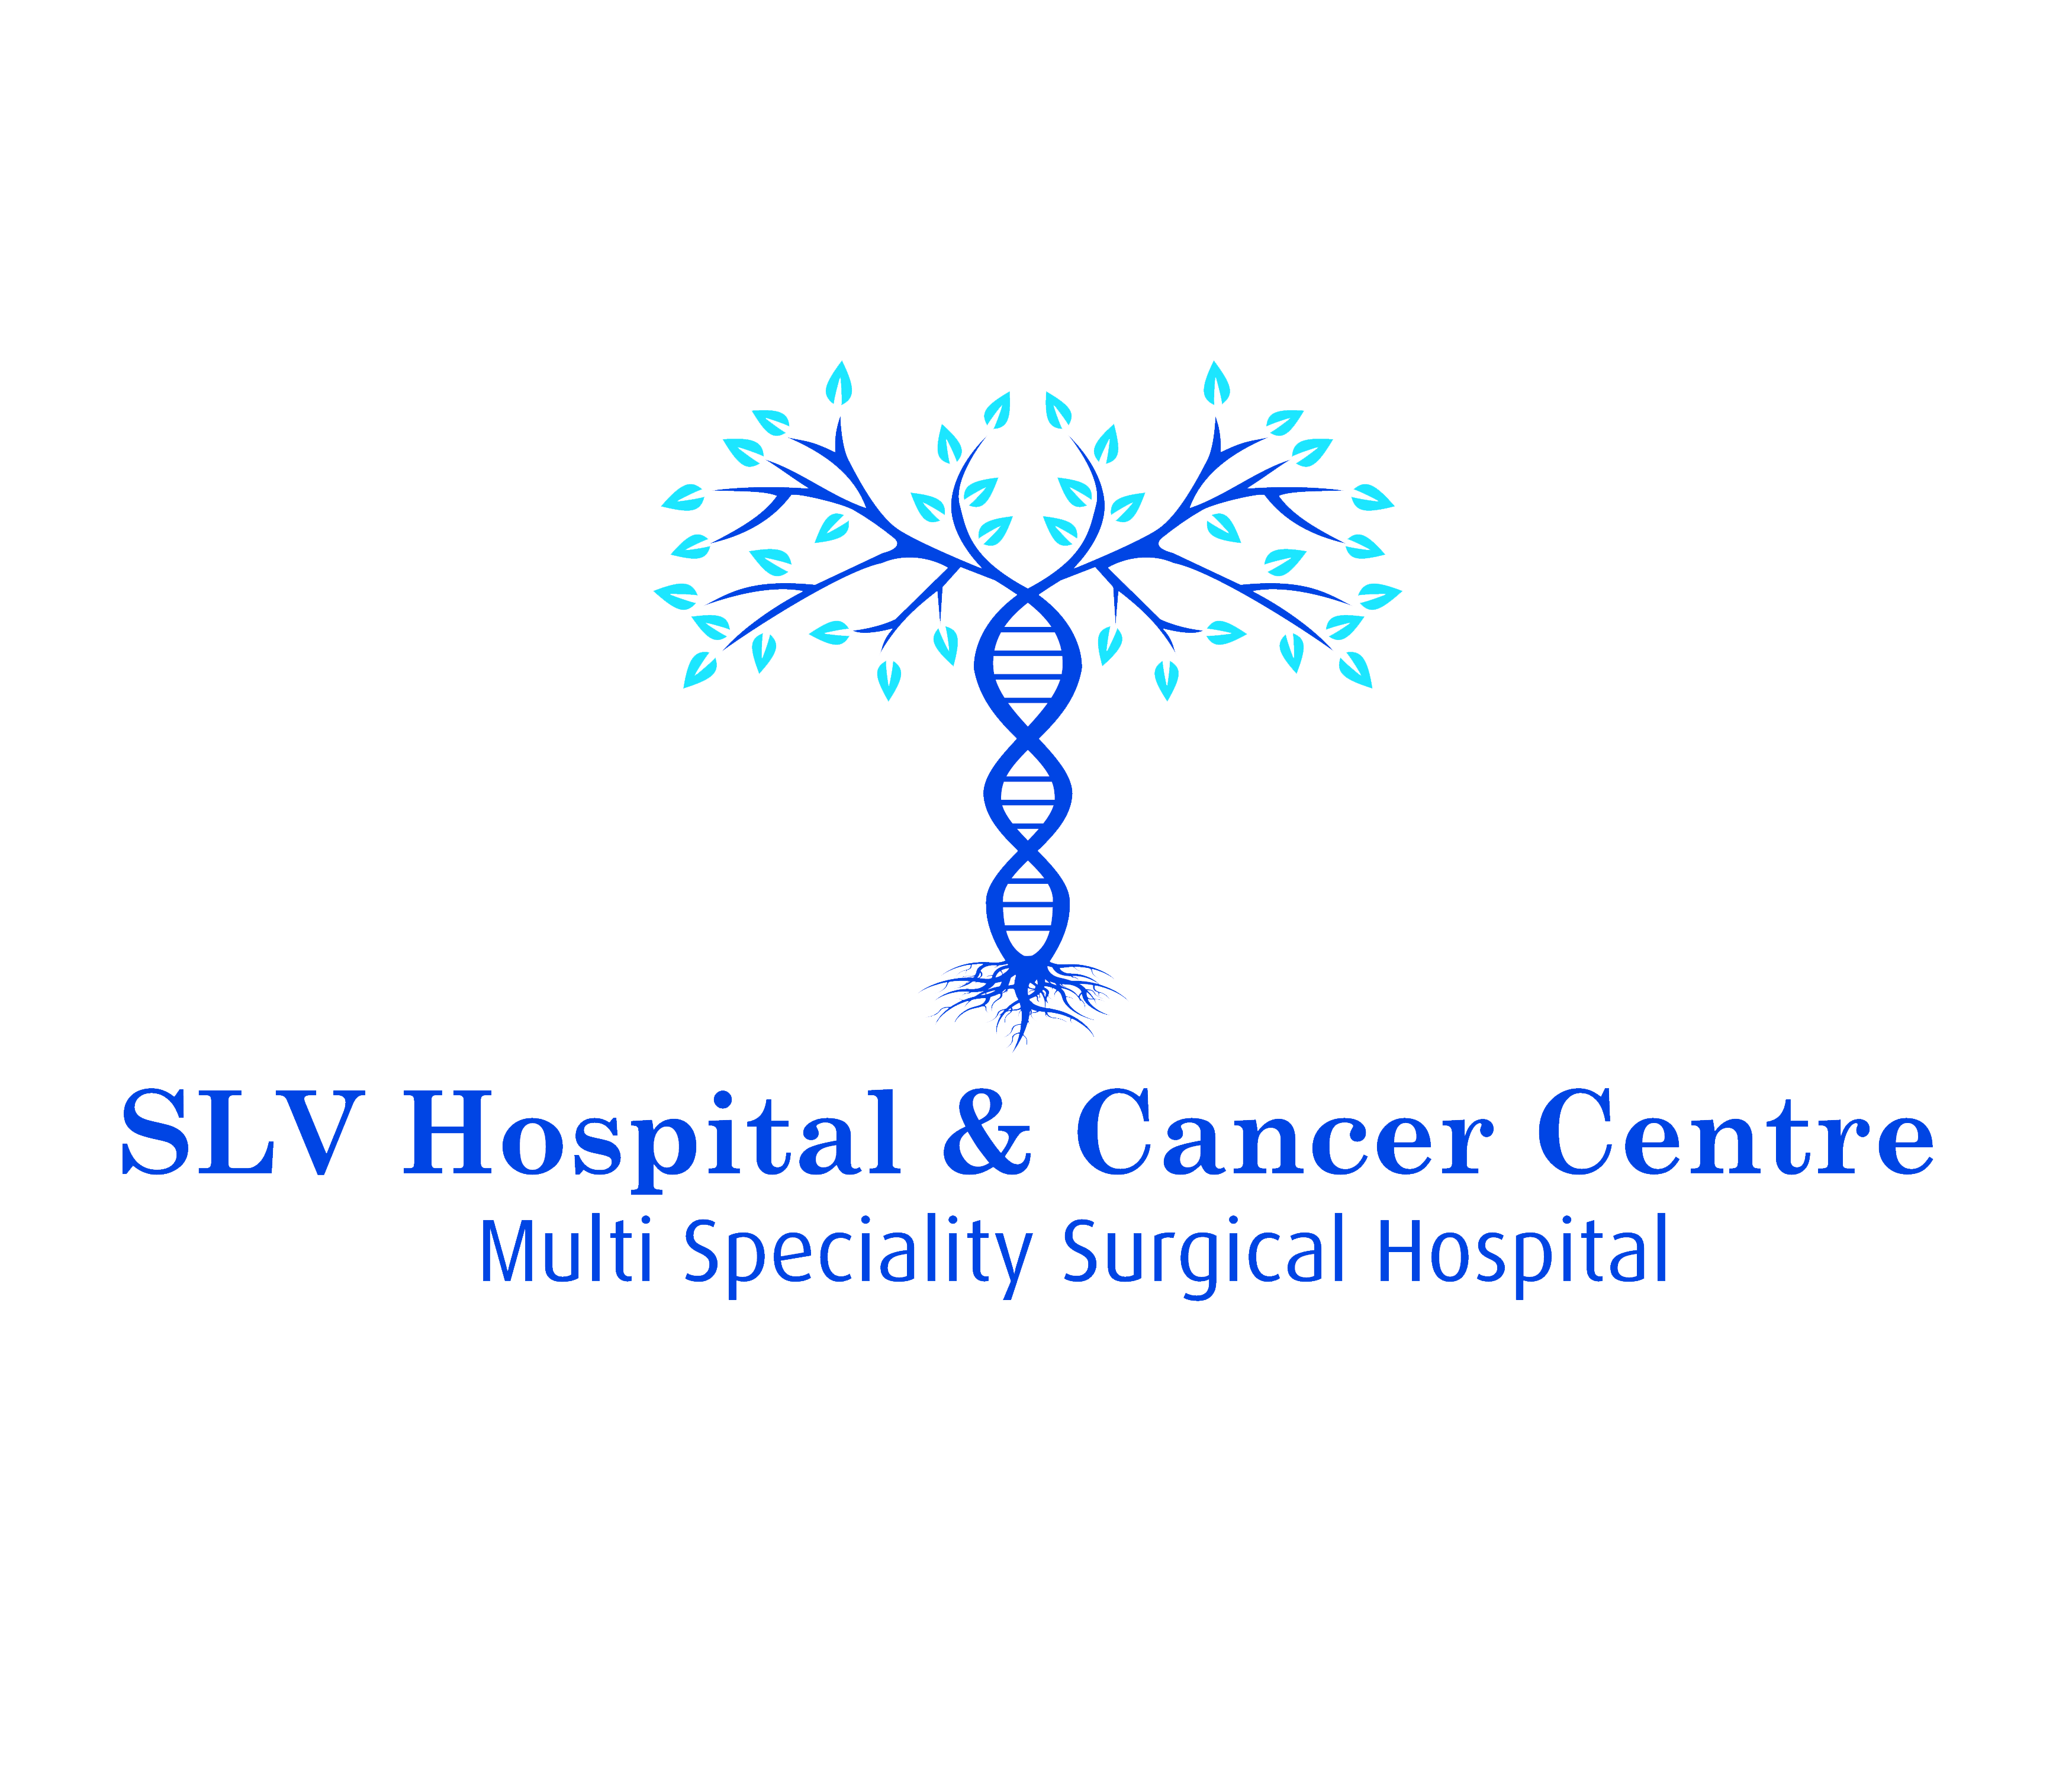 SLV Hospital & Cancer Centre|Hospitals|Medical Services